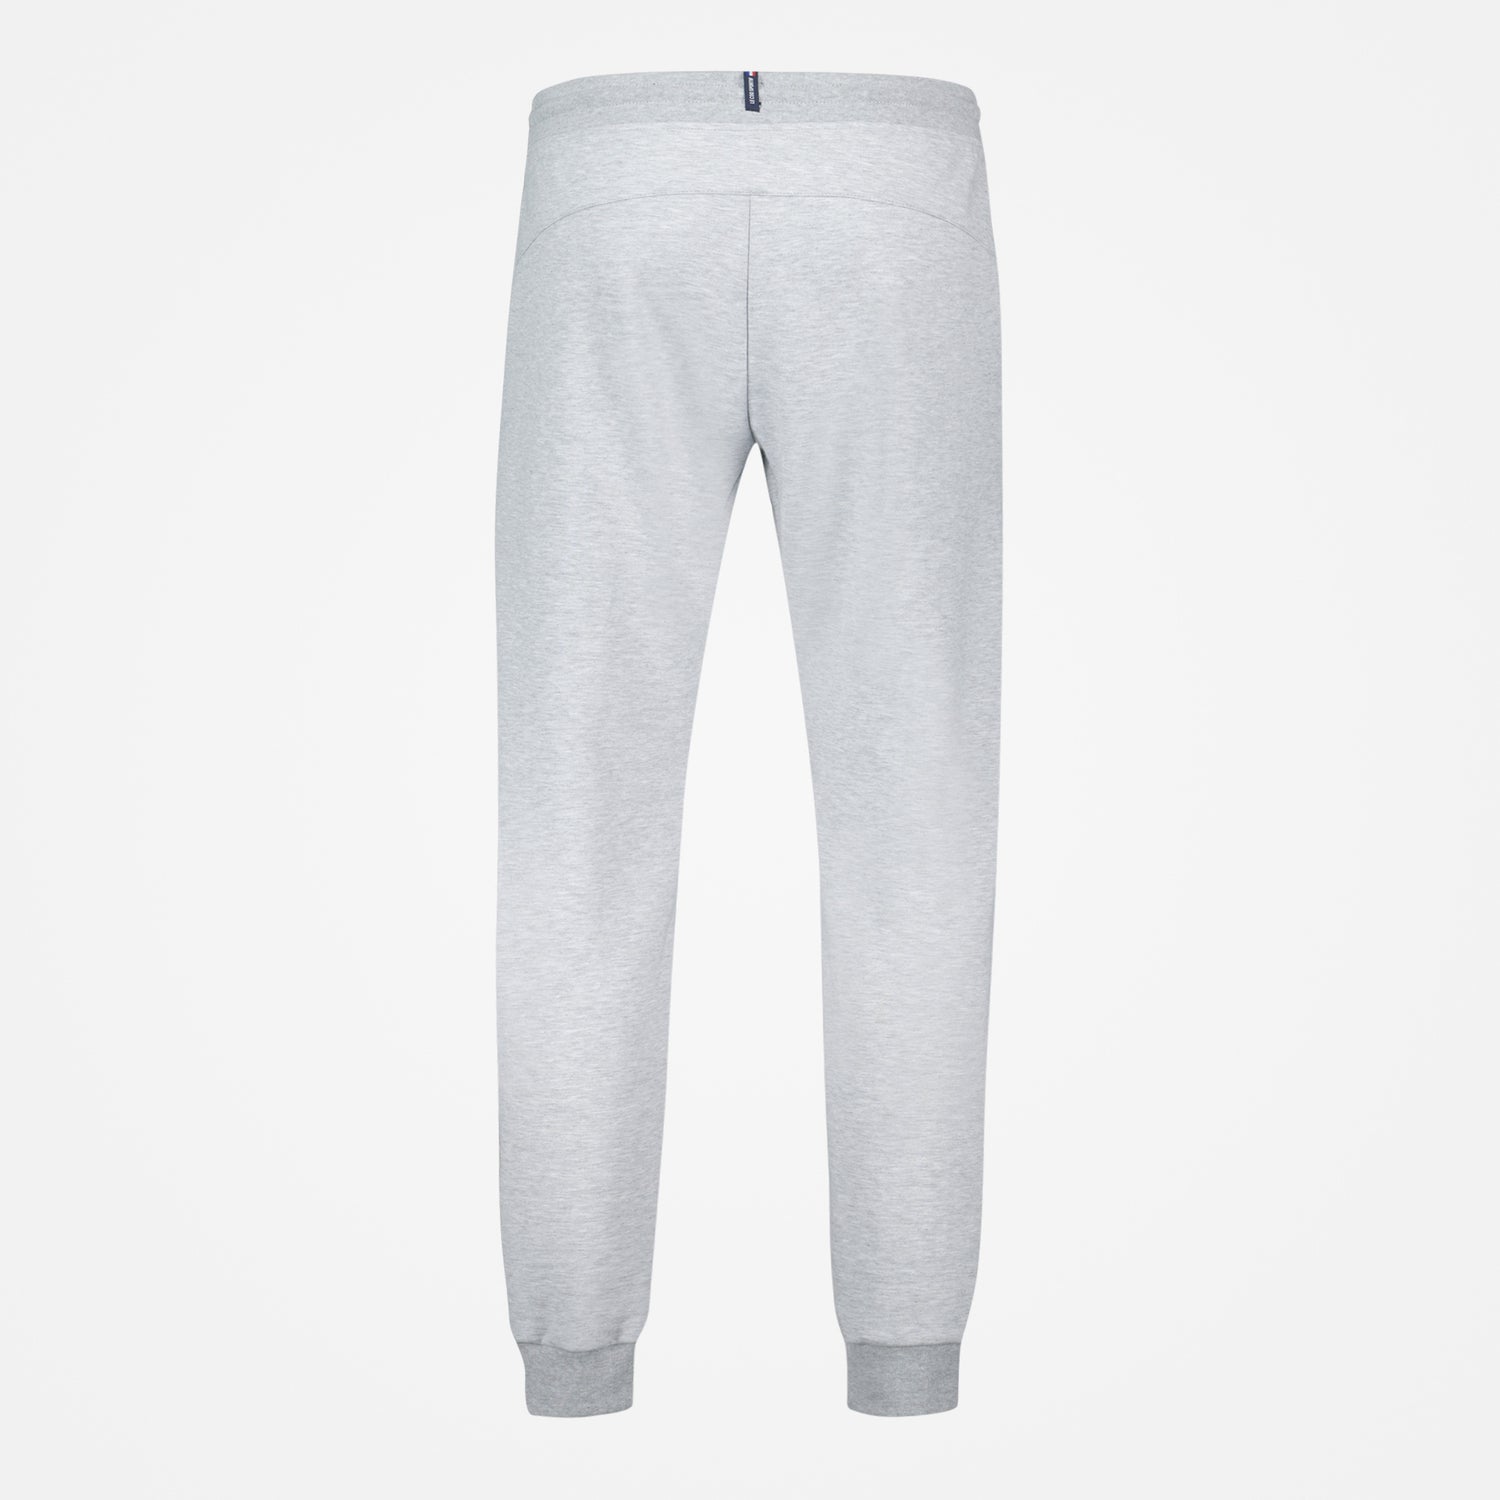 2310570-ESS Pant Regular N°4 M gris chiné clair  | Trousers Regular for men